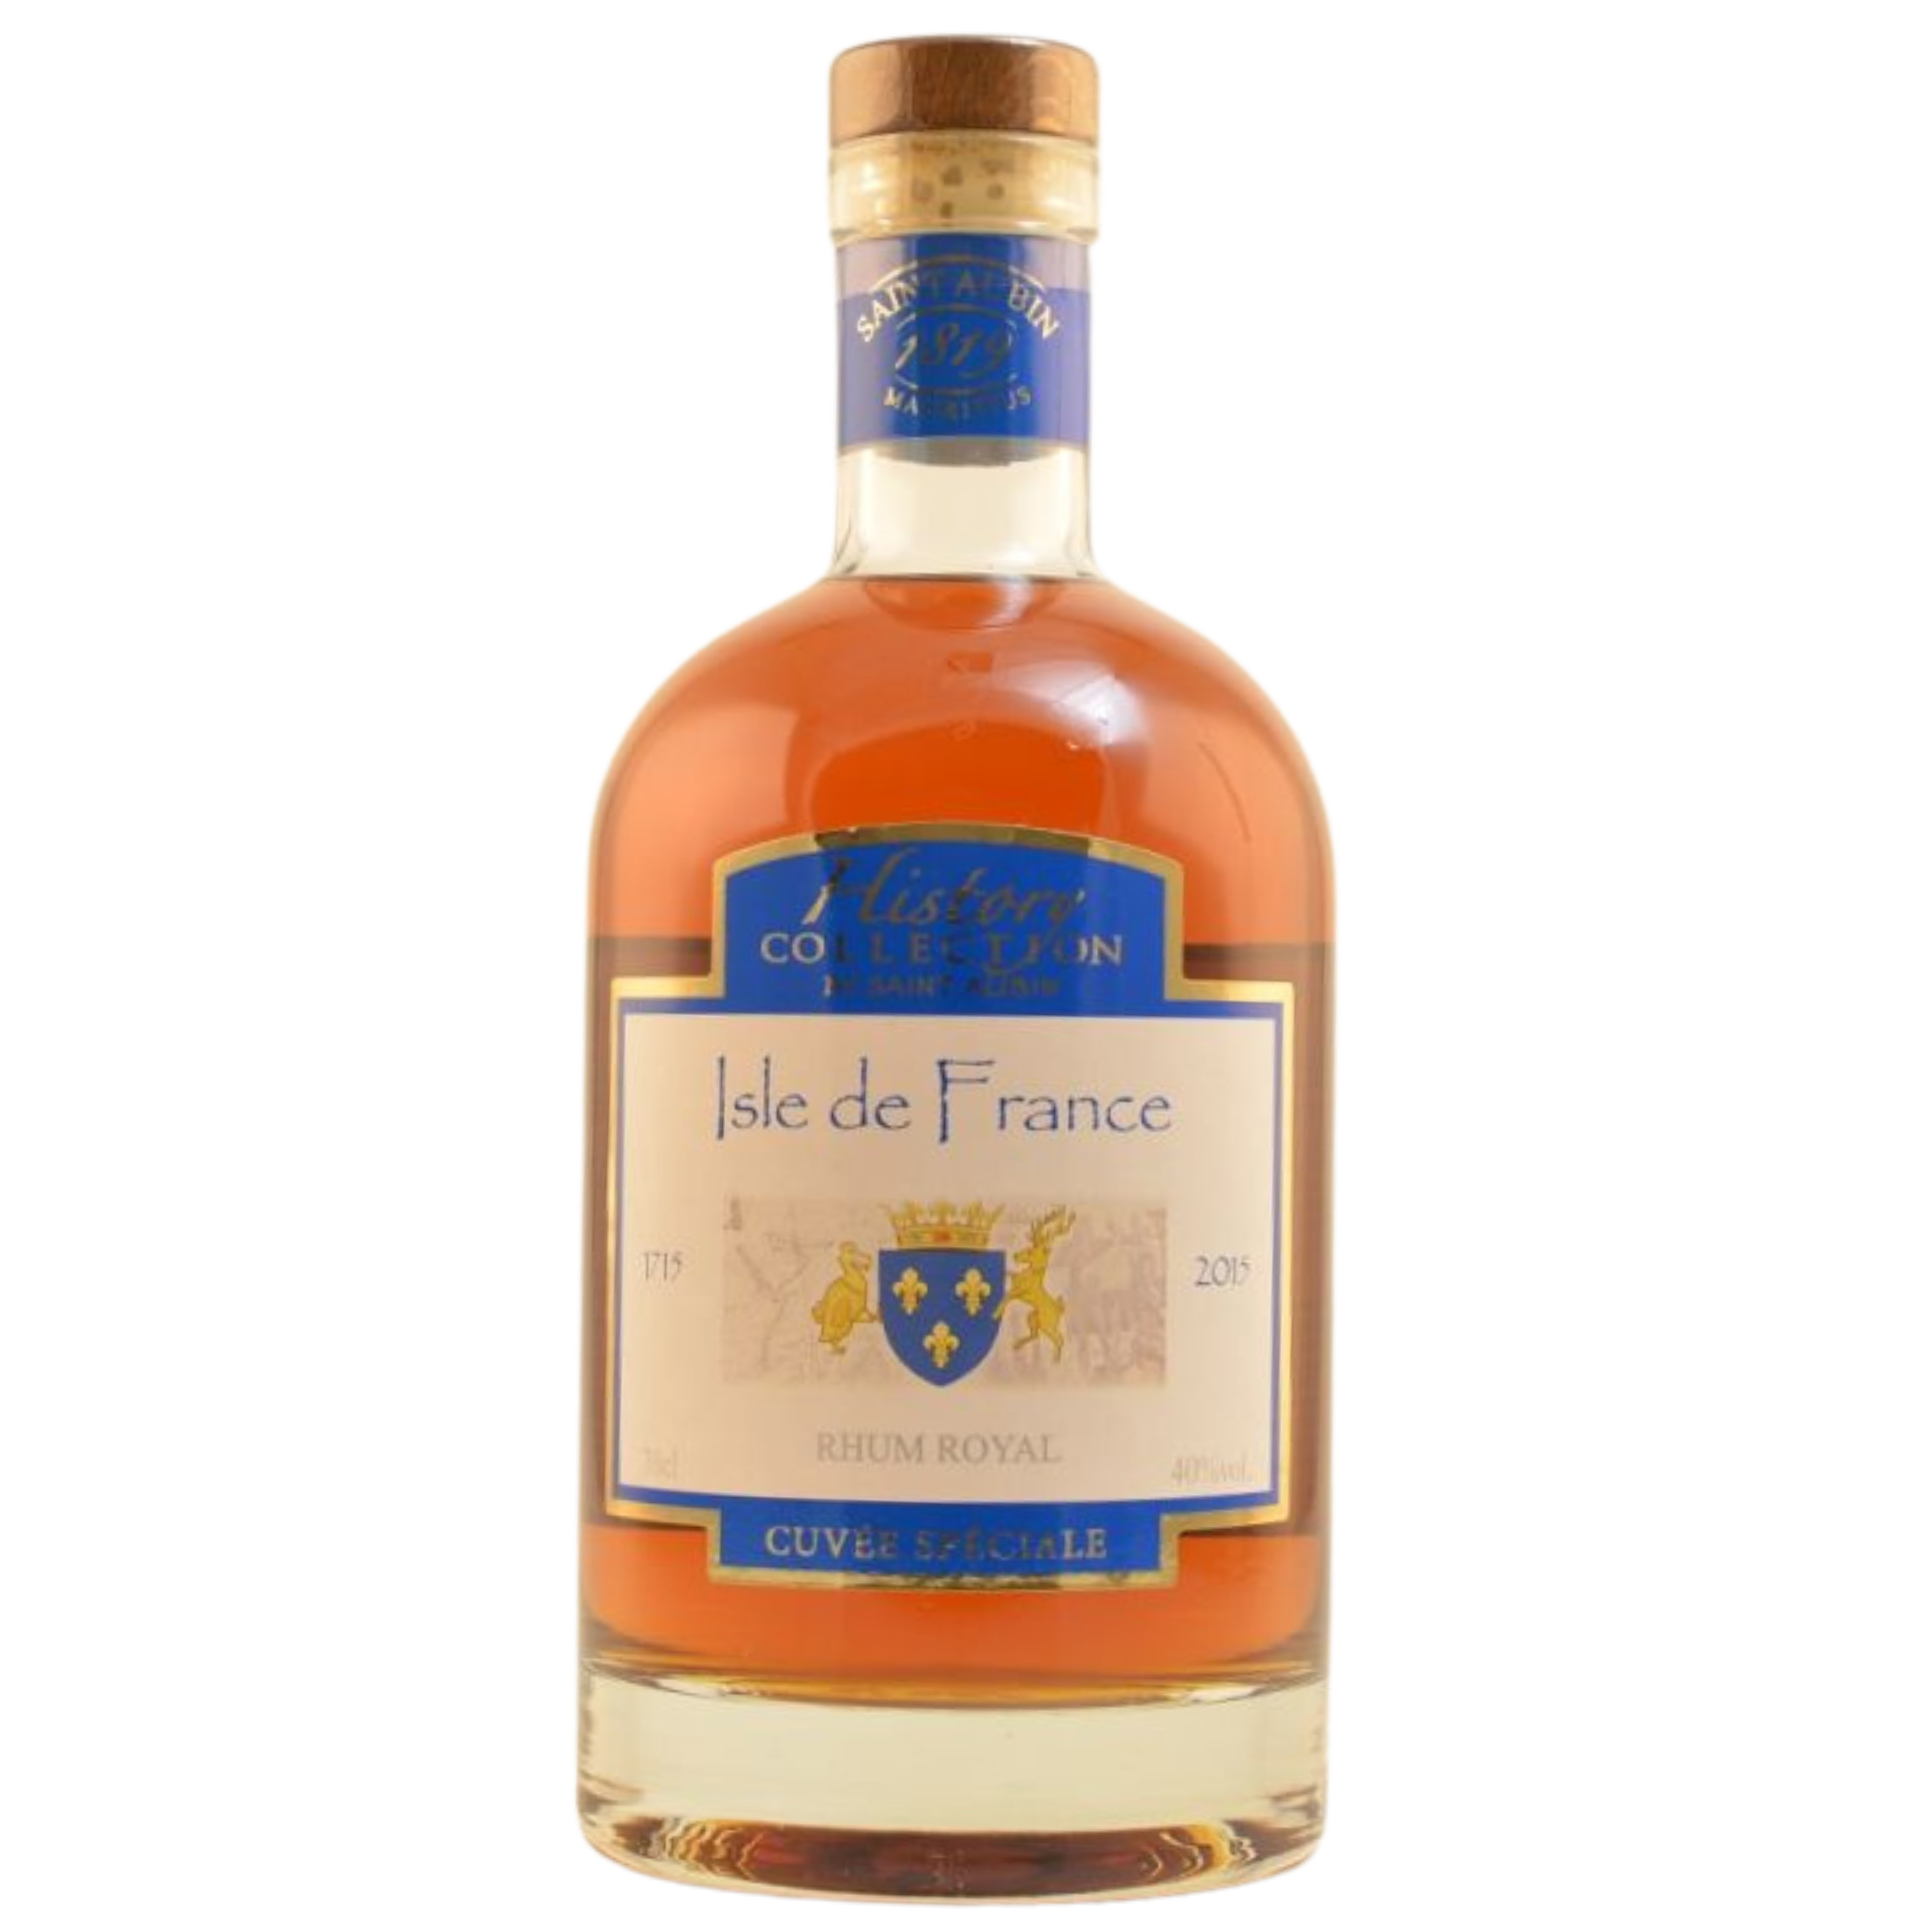 St. Aubin Isle de France Rum 40% 0,7l